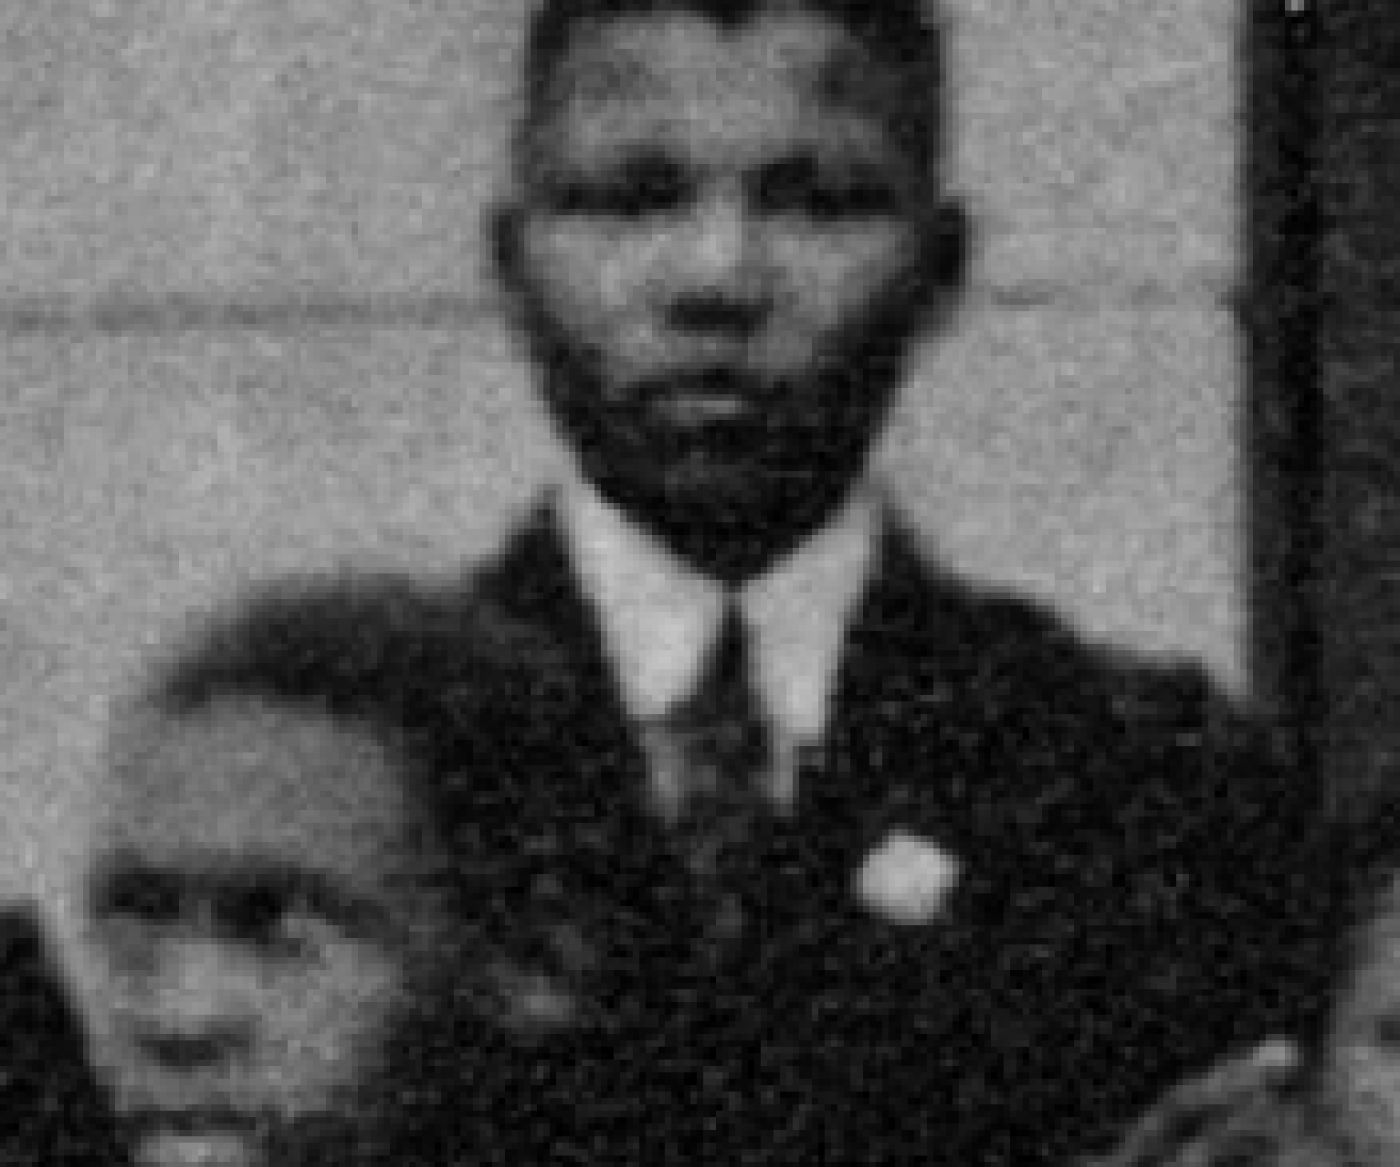 Nelson Mandela Healdtown photo detail